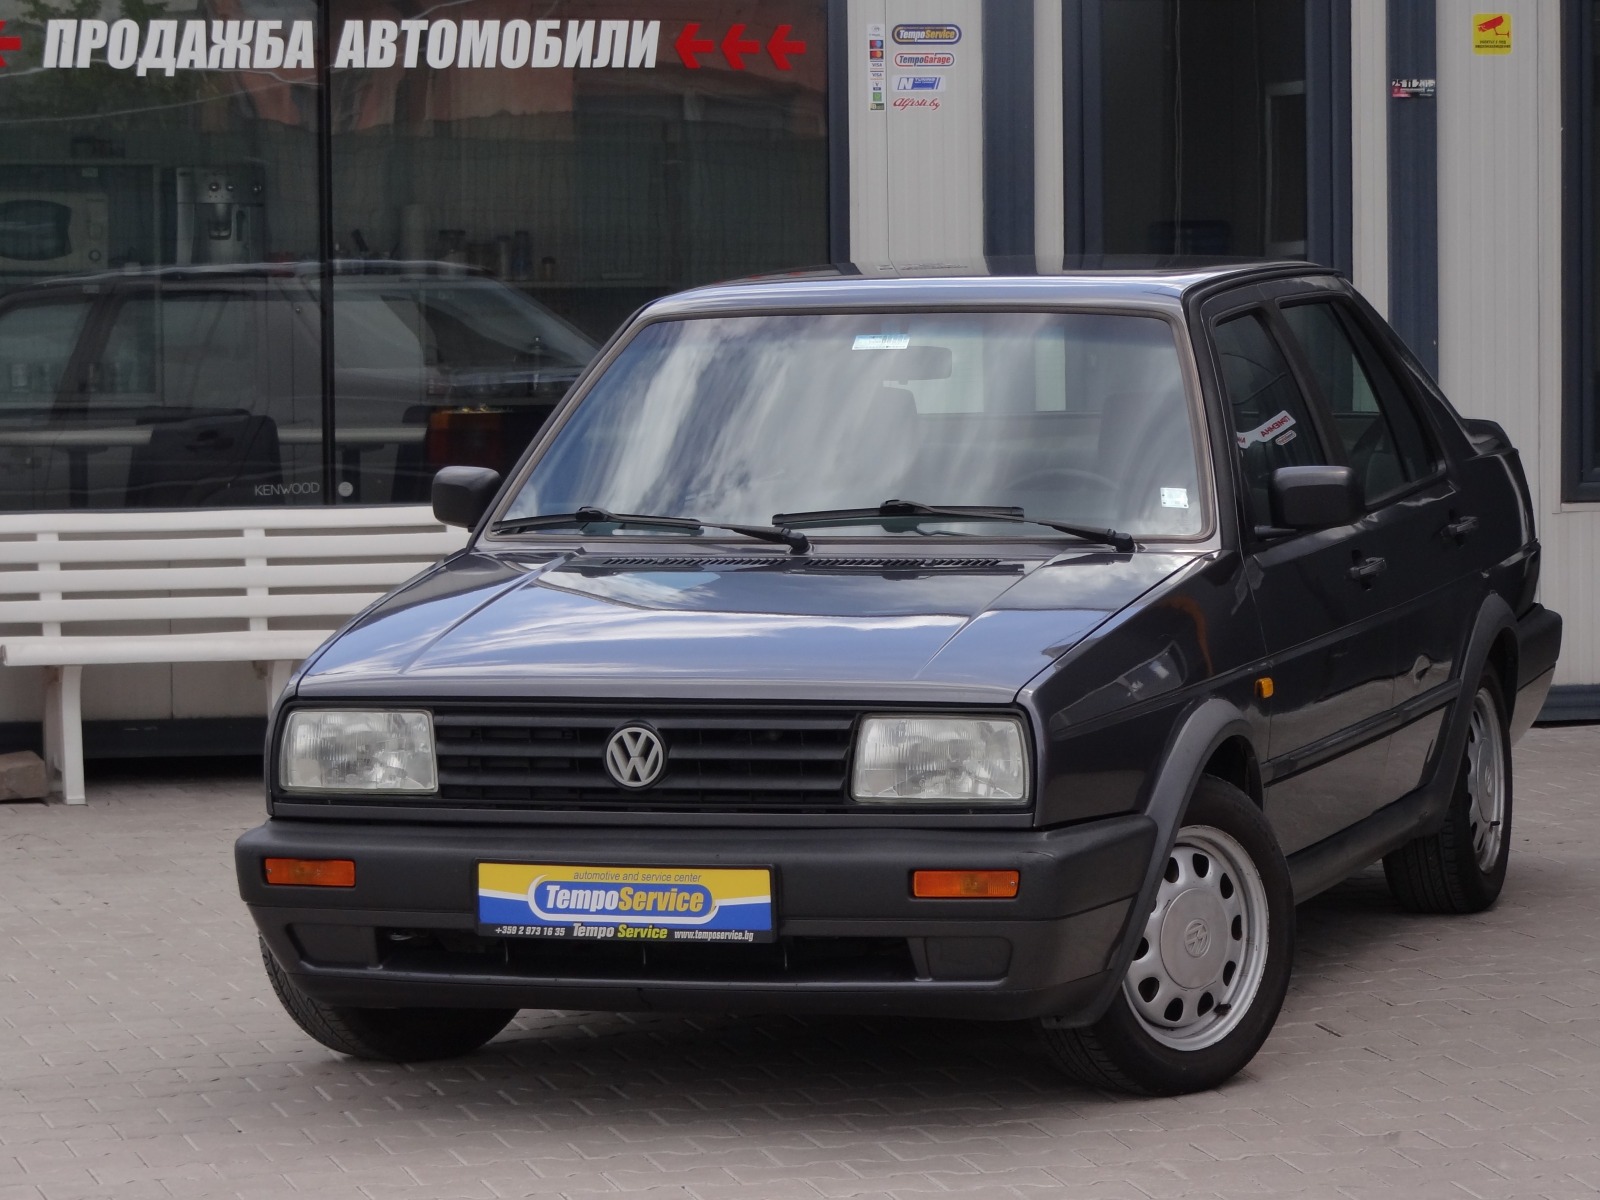 VW Jetta 1.6 - 75k.c. / Климатик / 5-скорости / Euro-2 / - изображение 1